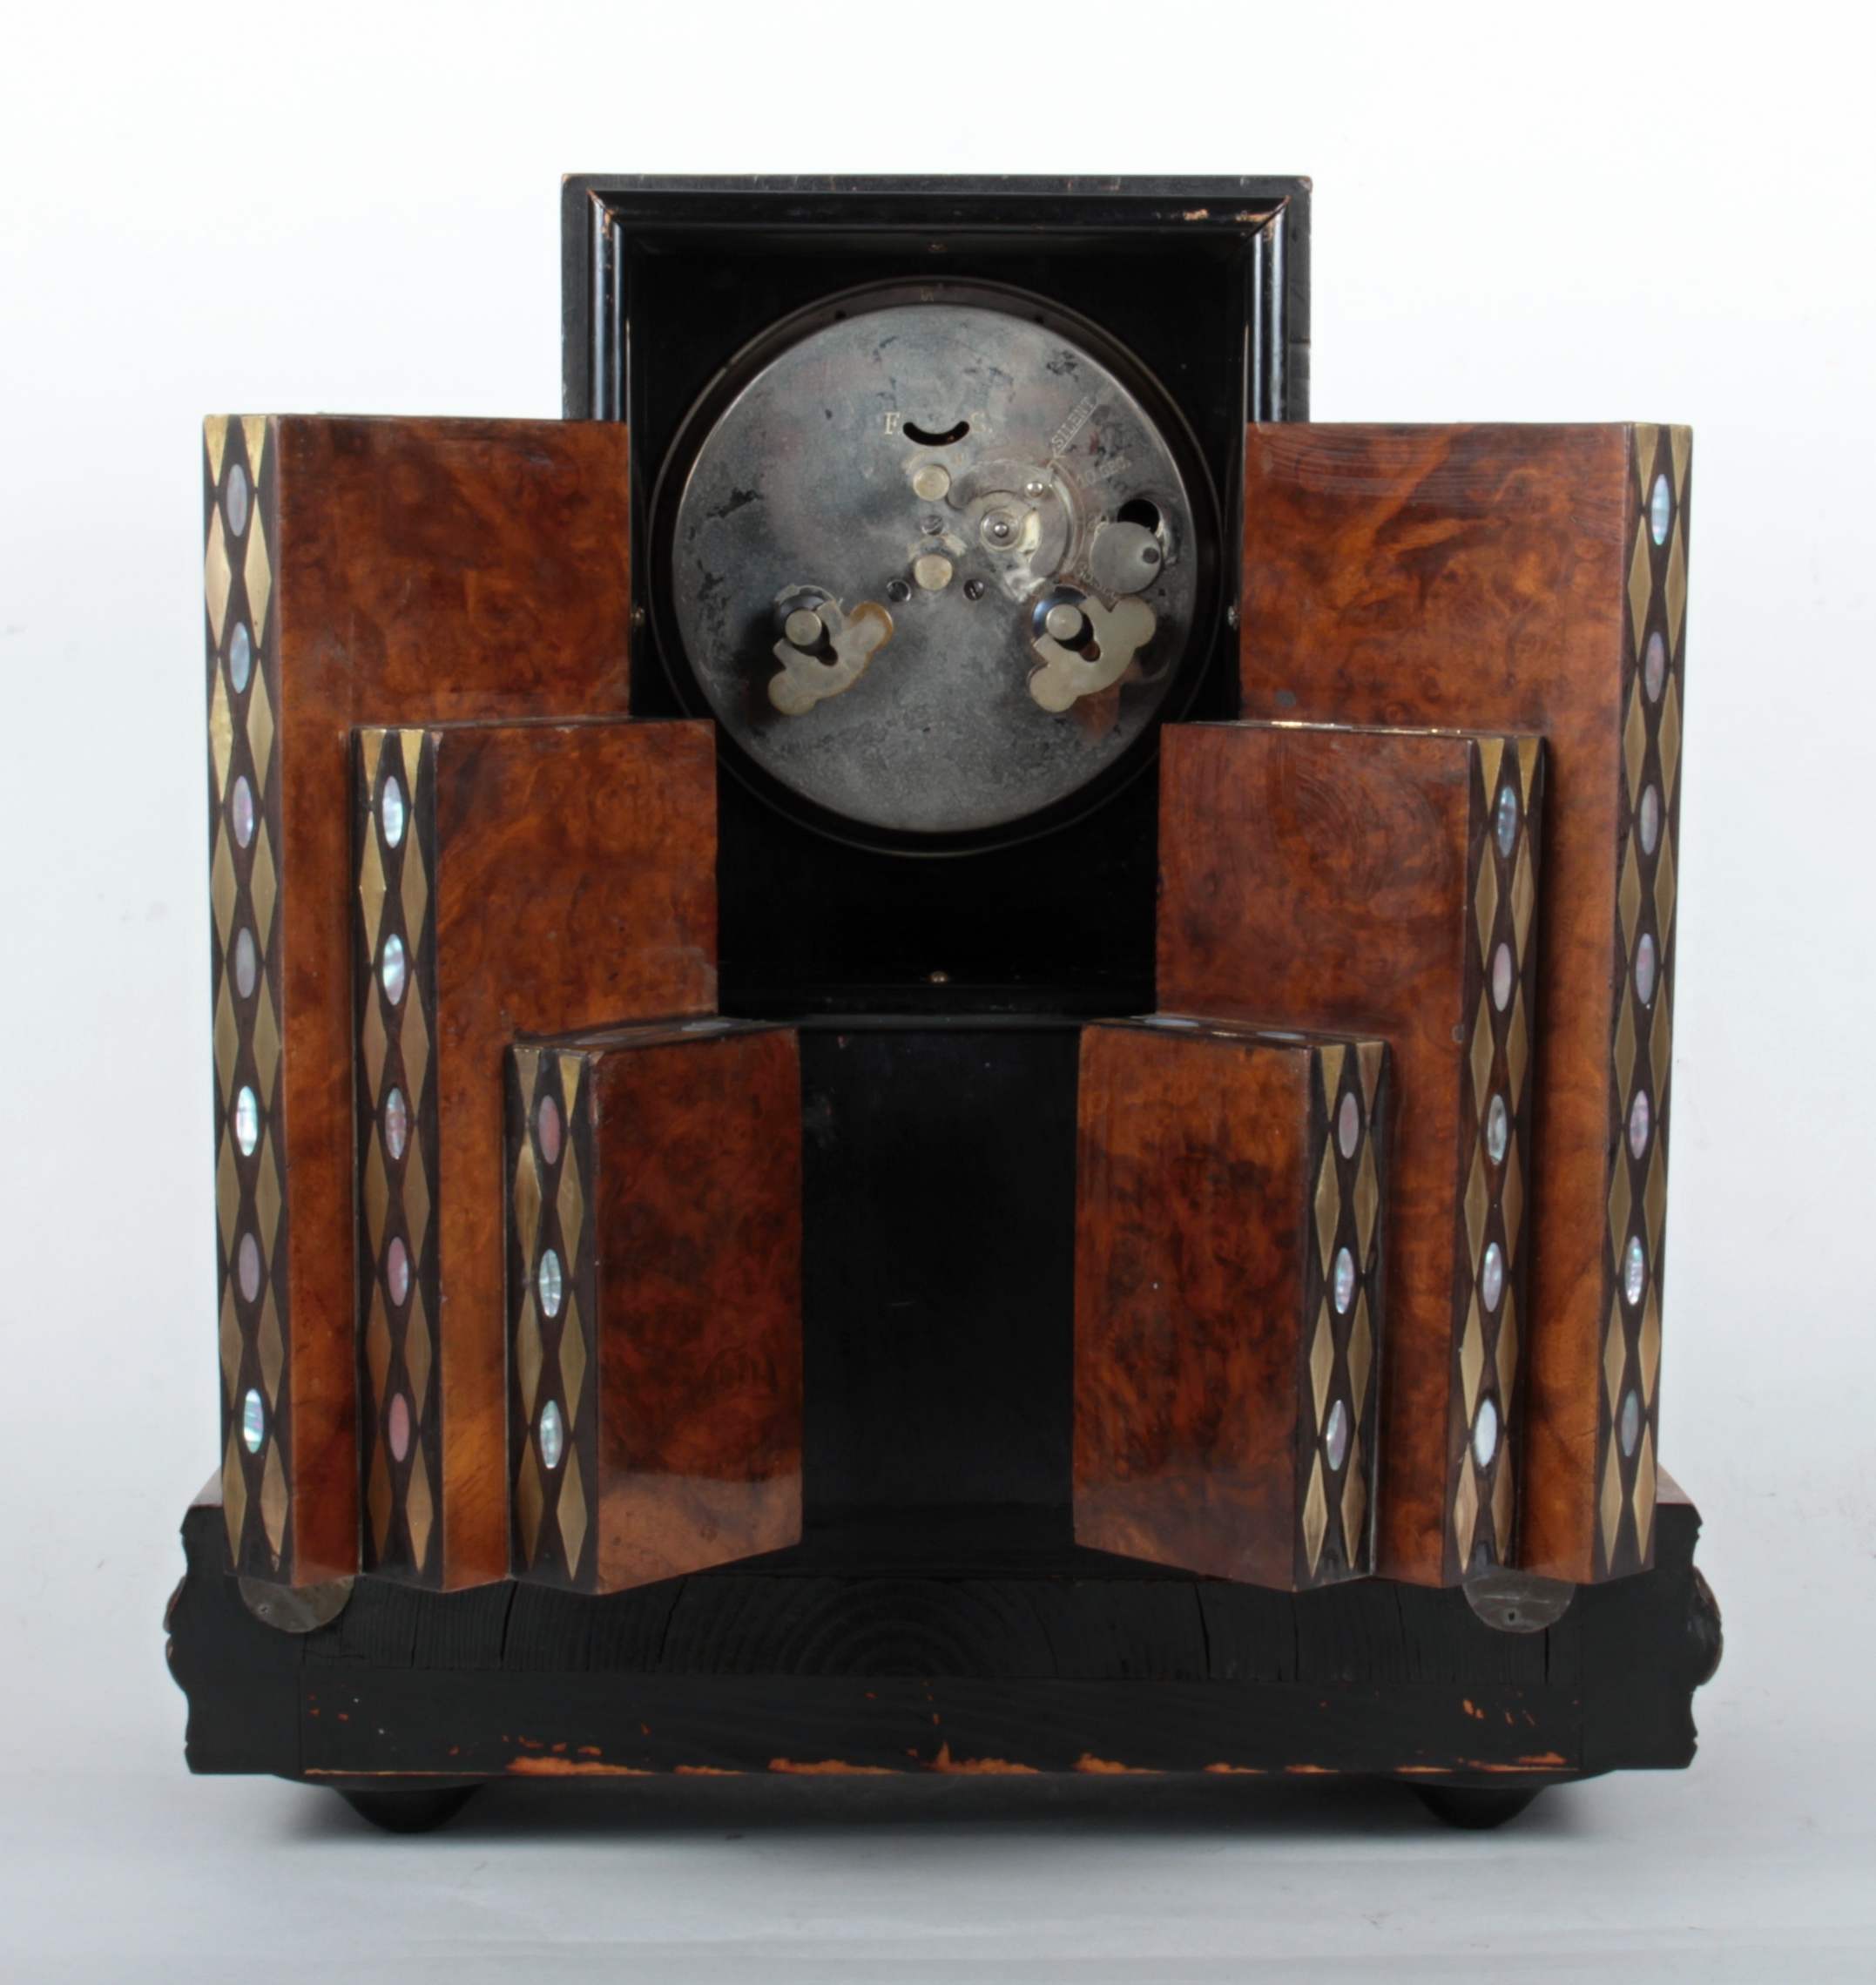 Table clock designed by architect Otto Prutscher (1880 - 1949)